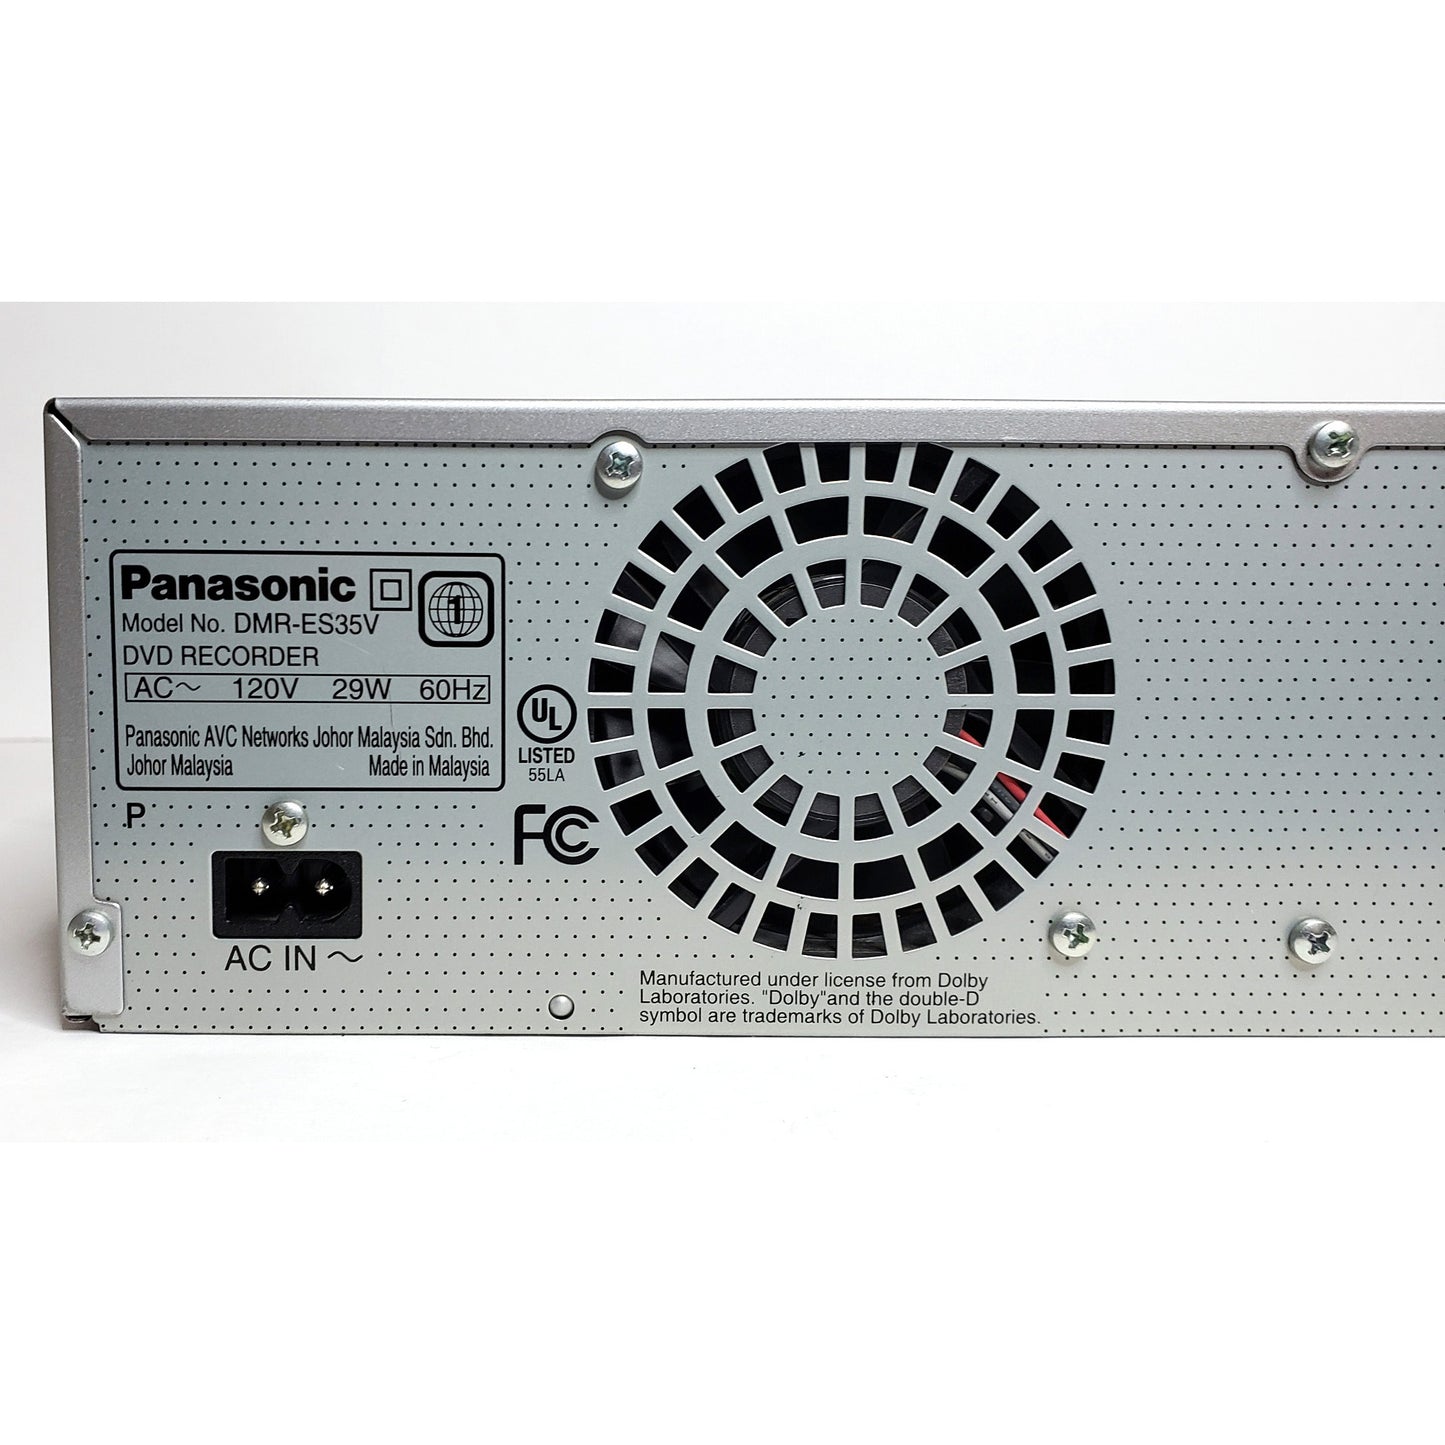 Panasonic DMR-ES35V VCR/DVD Recorder Combo - Label